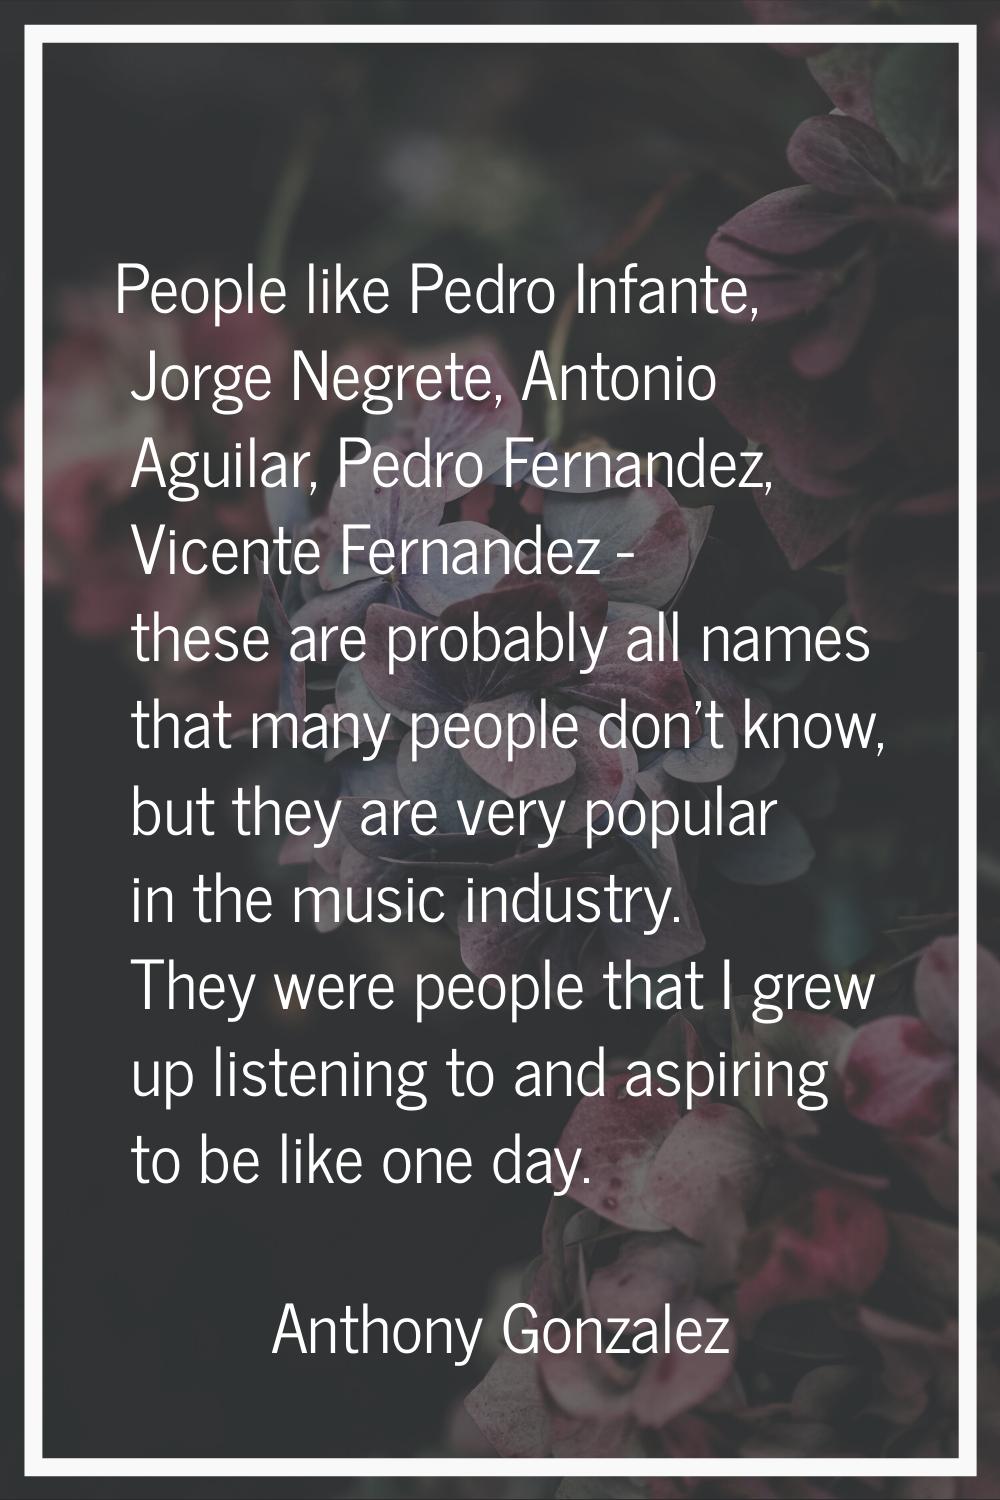 People like Pedro Infante, Jorge Negrete, Antonio Aguilar, Pedro Fernandez, Vicente Fernandez - the